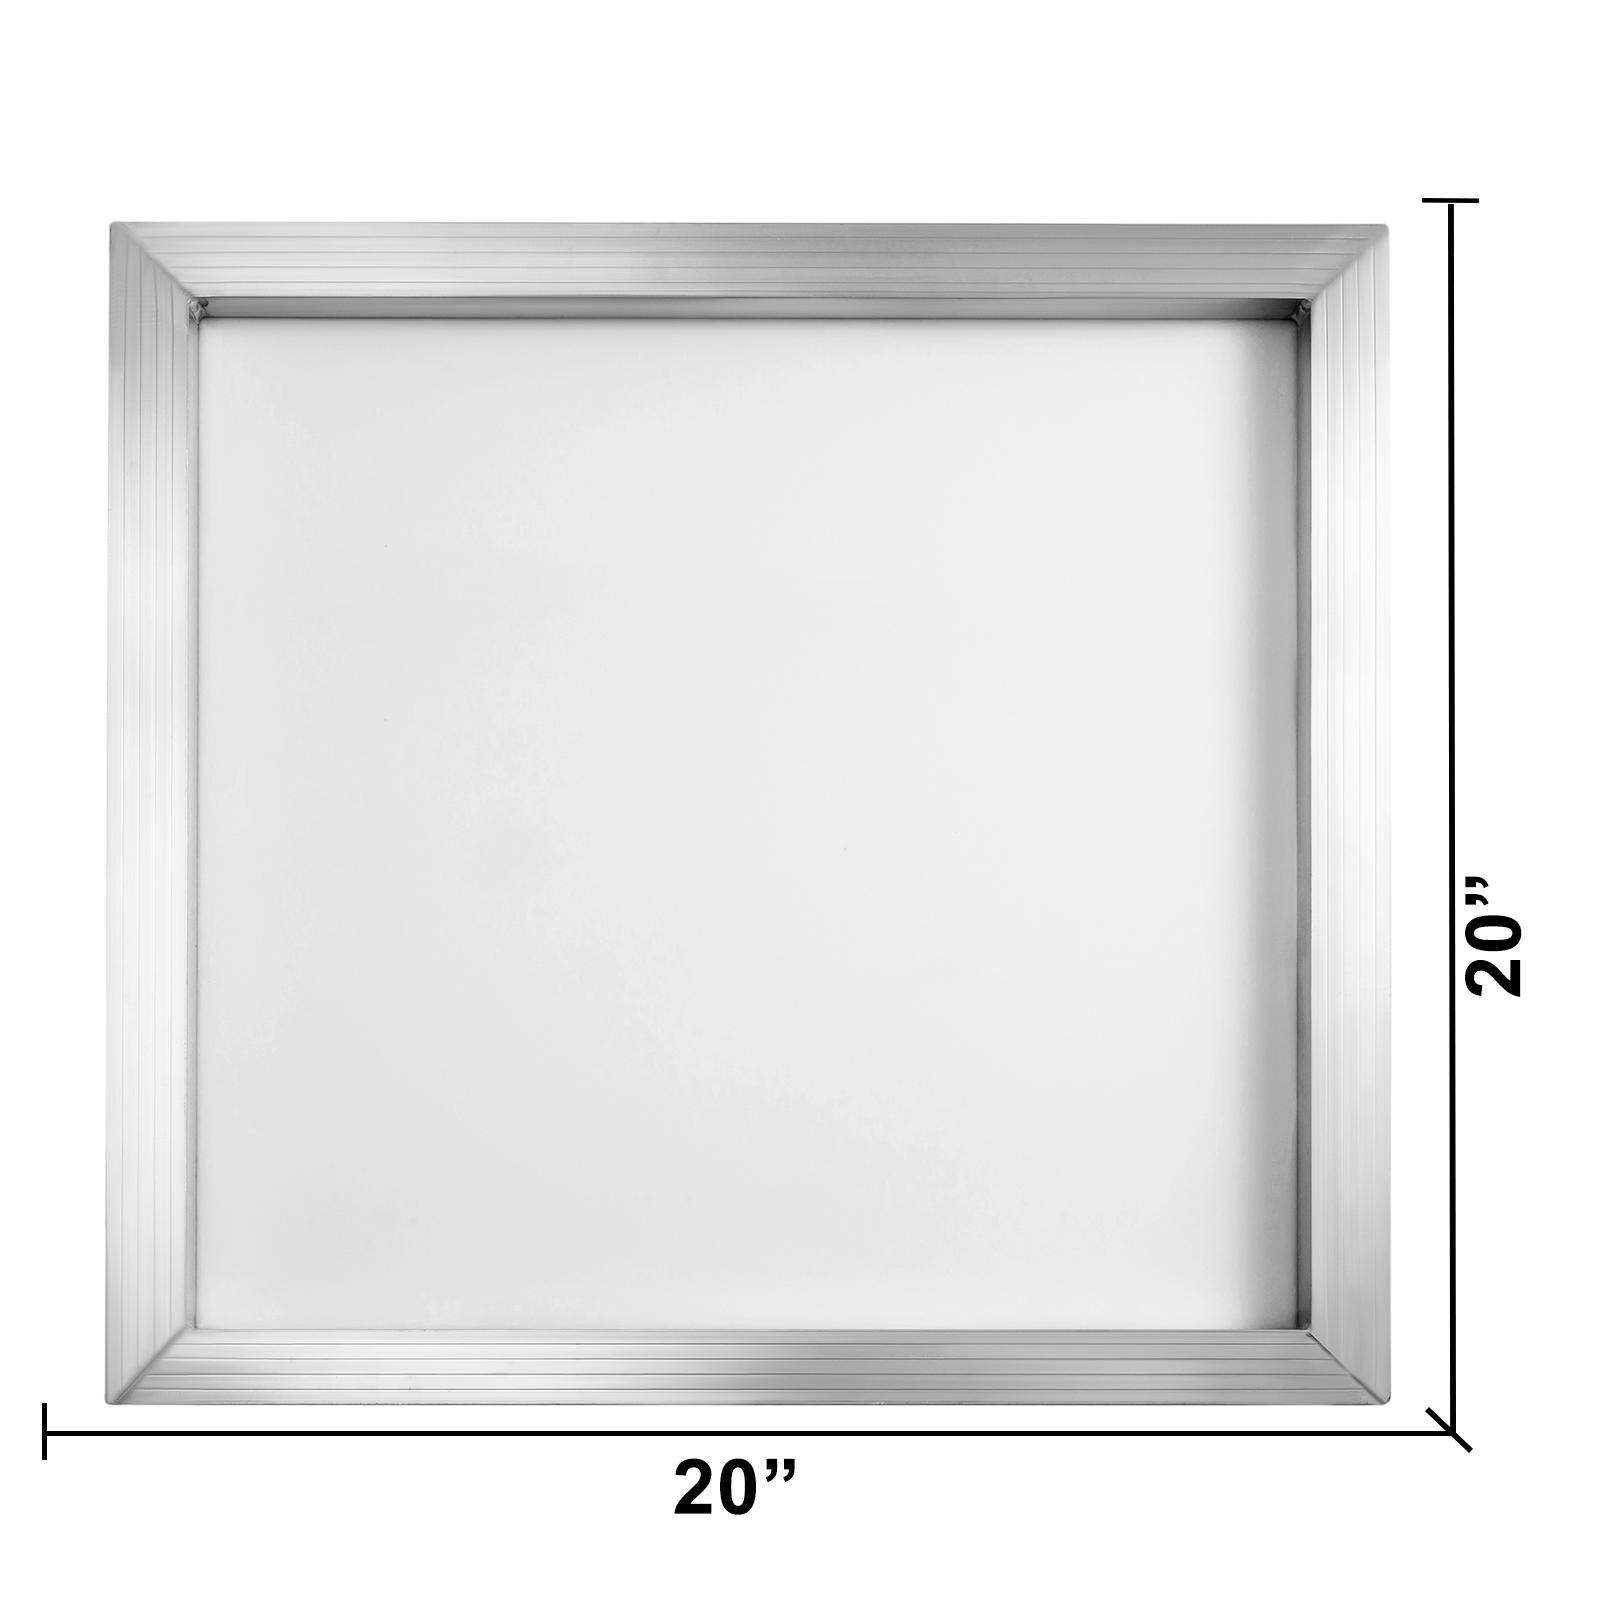 6 Pack 20" x 24" Aluminum Frame Silk Screen Printing Screens with 130 White Mesh 